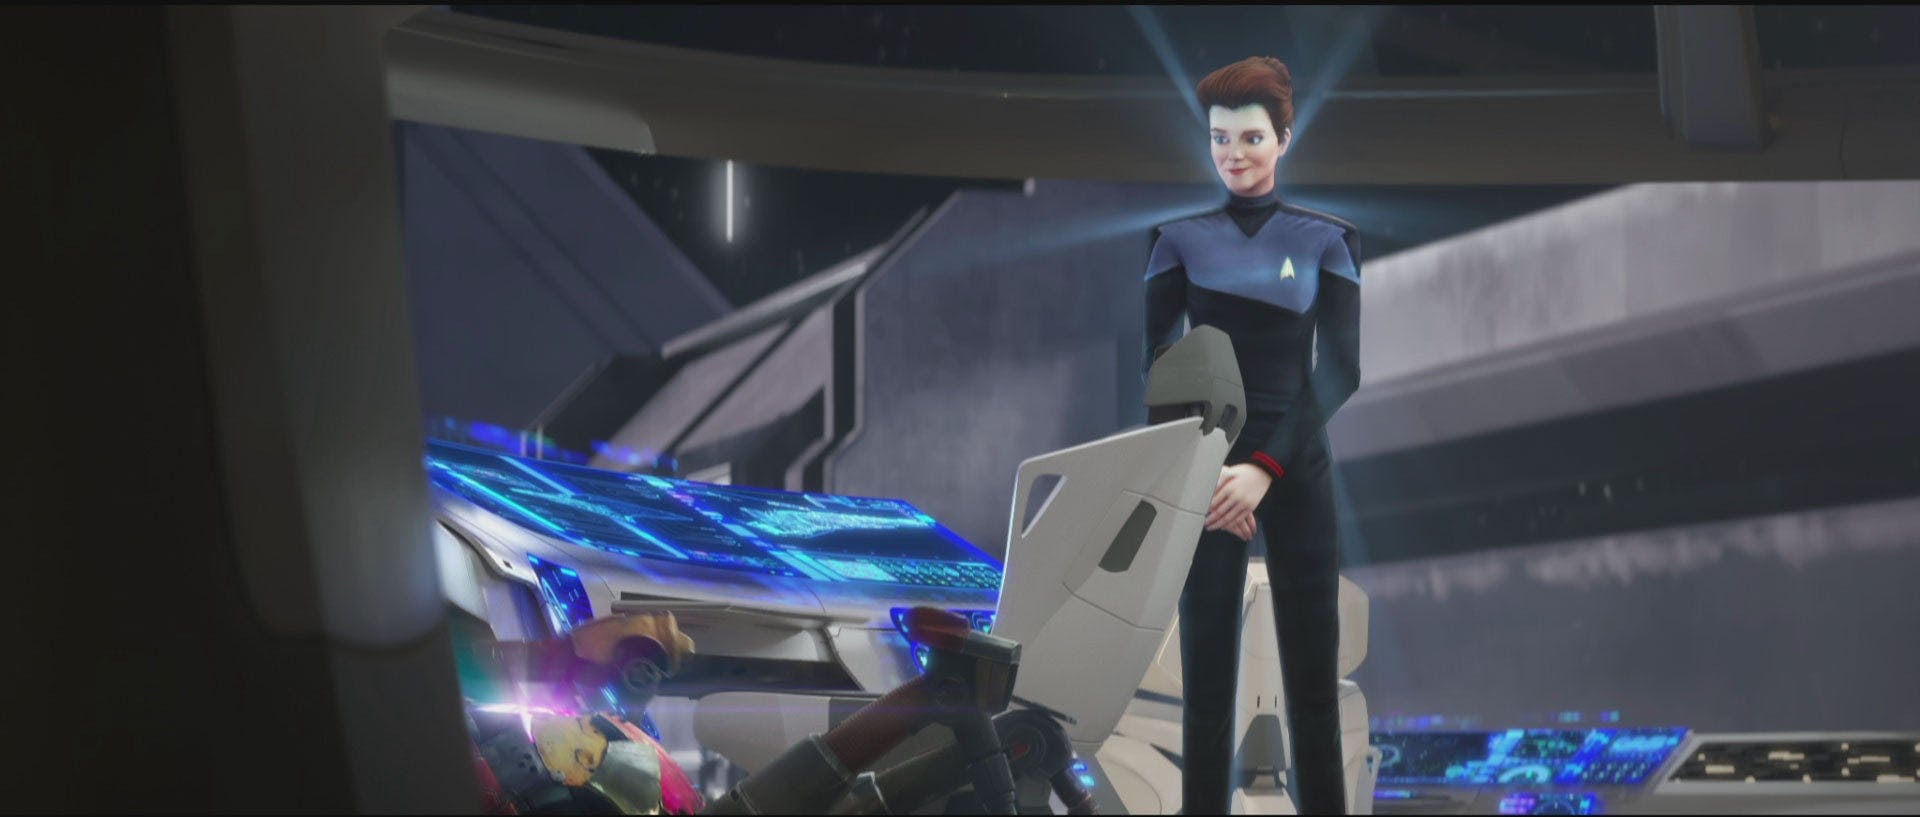 Hologram Janeway talks to Zero.